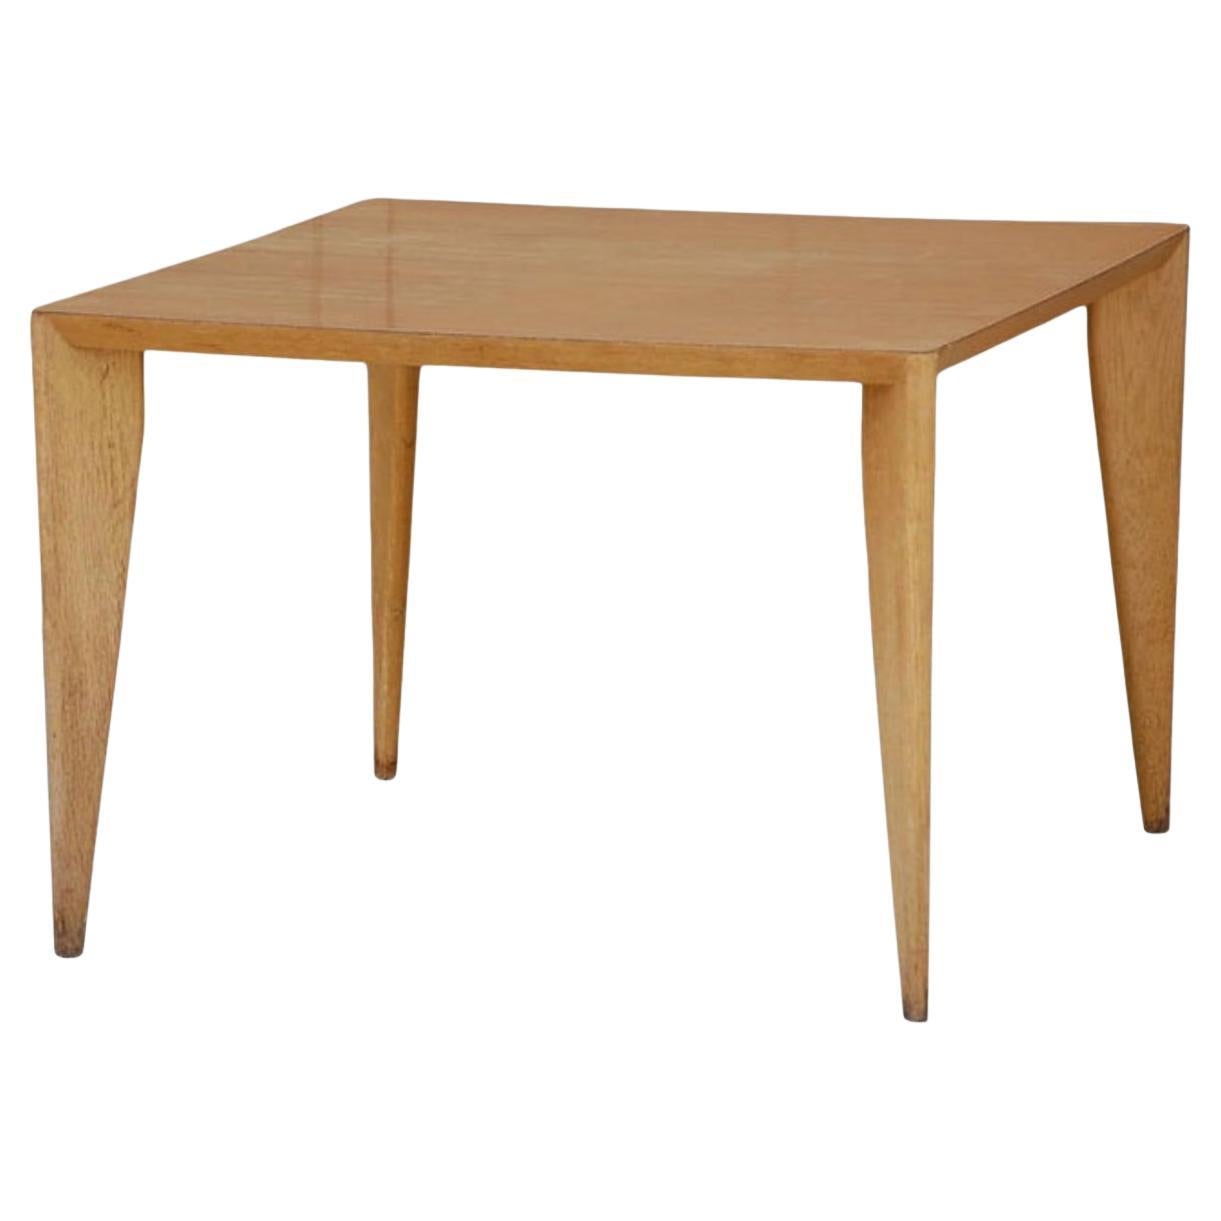 Table basse/table d'appoint moderniste en bois blanchi